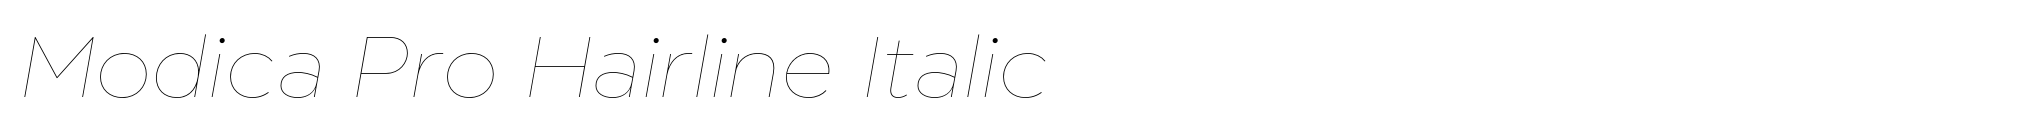 Modica Pro Hairline Italic image